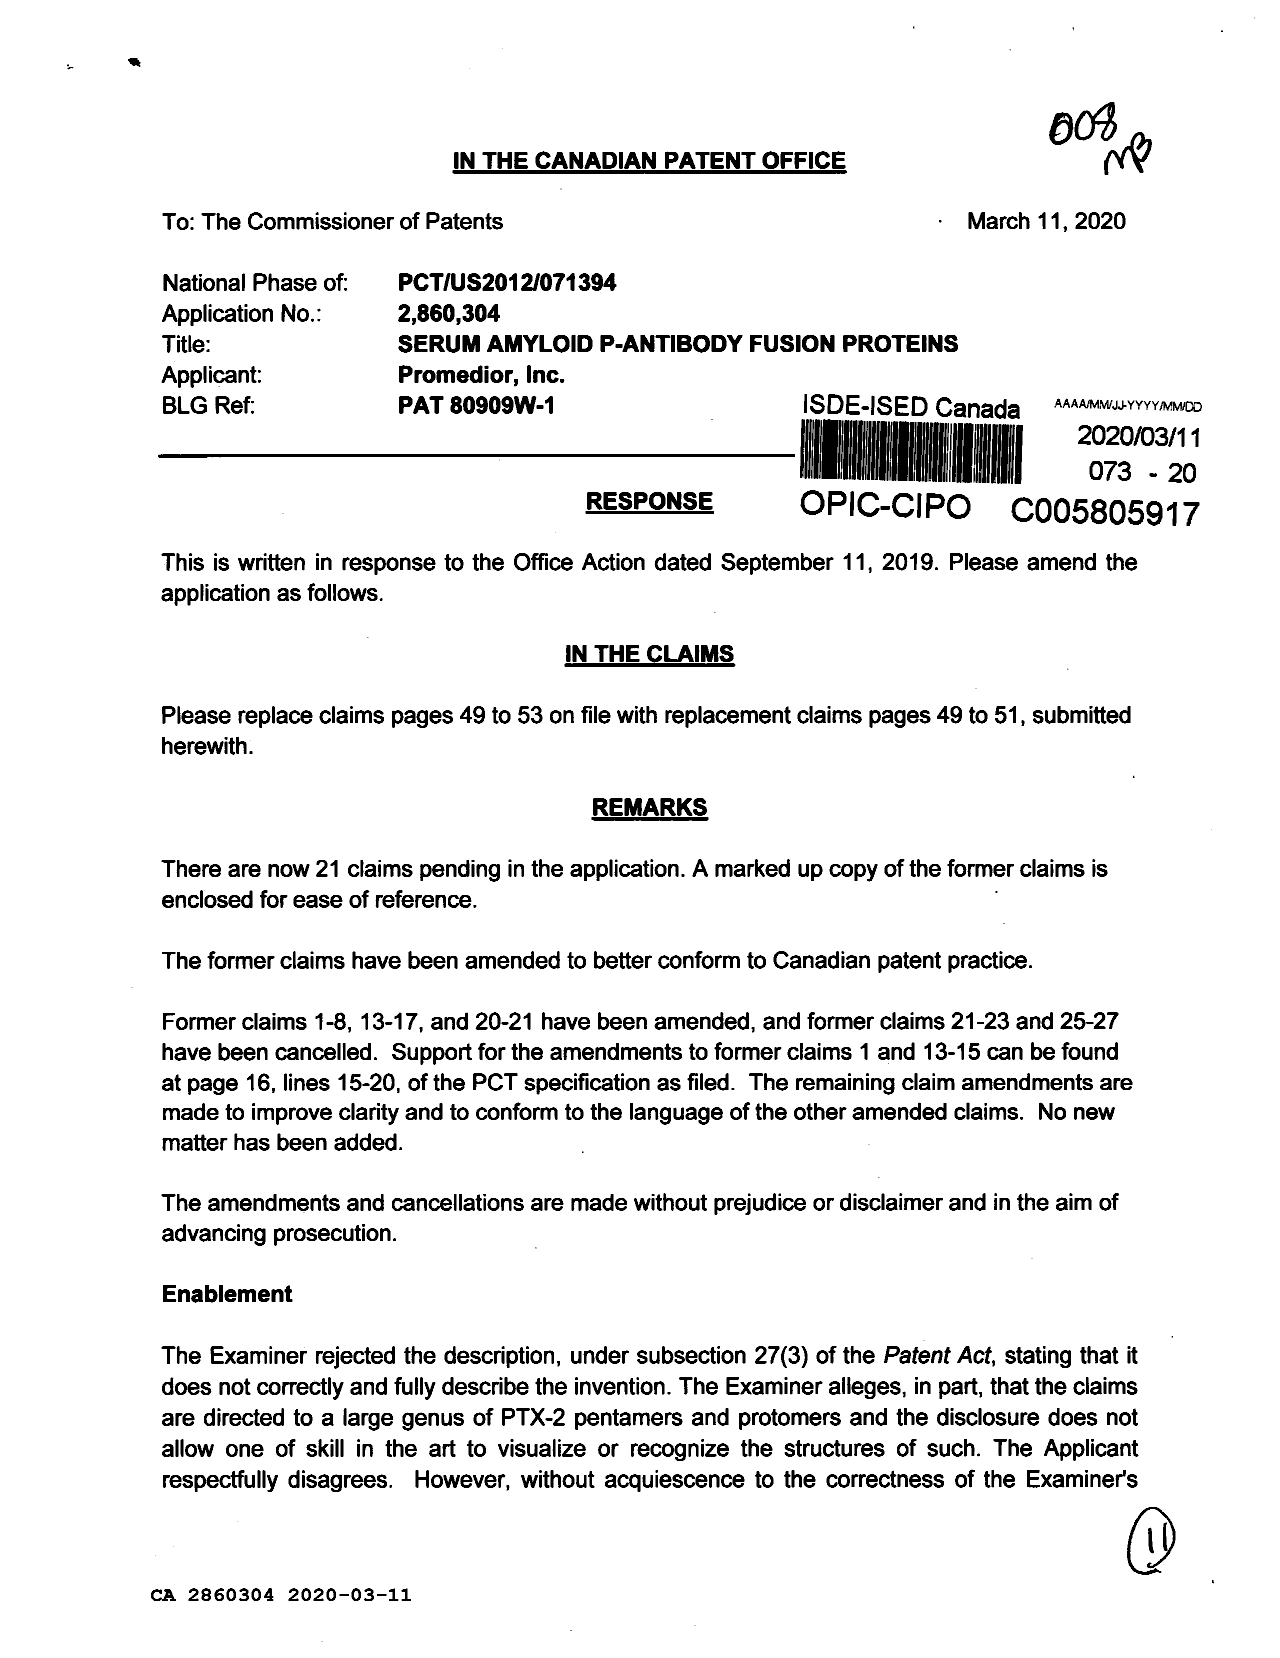 Canadian Patent Document 2860304. Amendment 20200311. Image 1 of 11